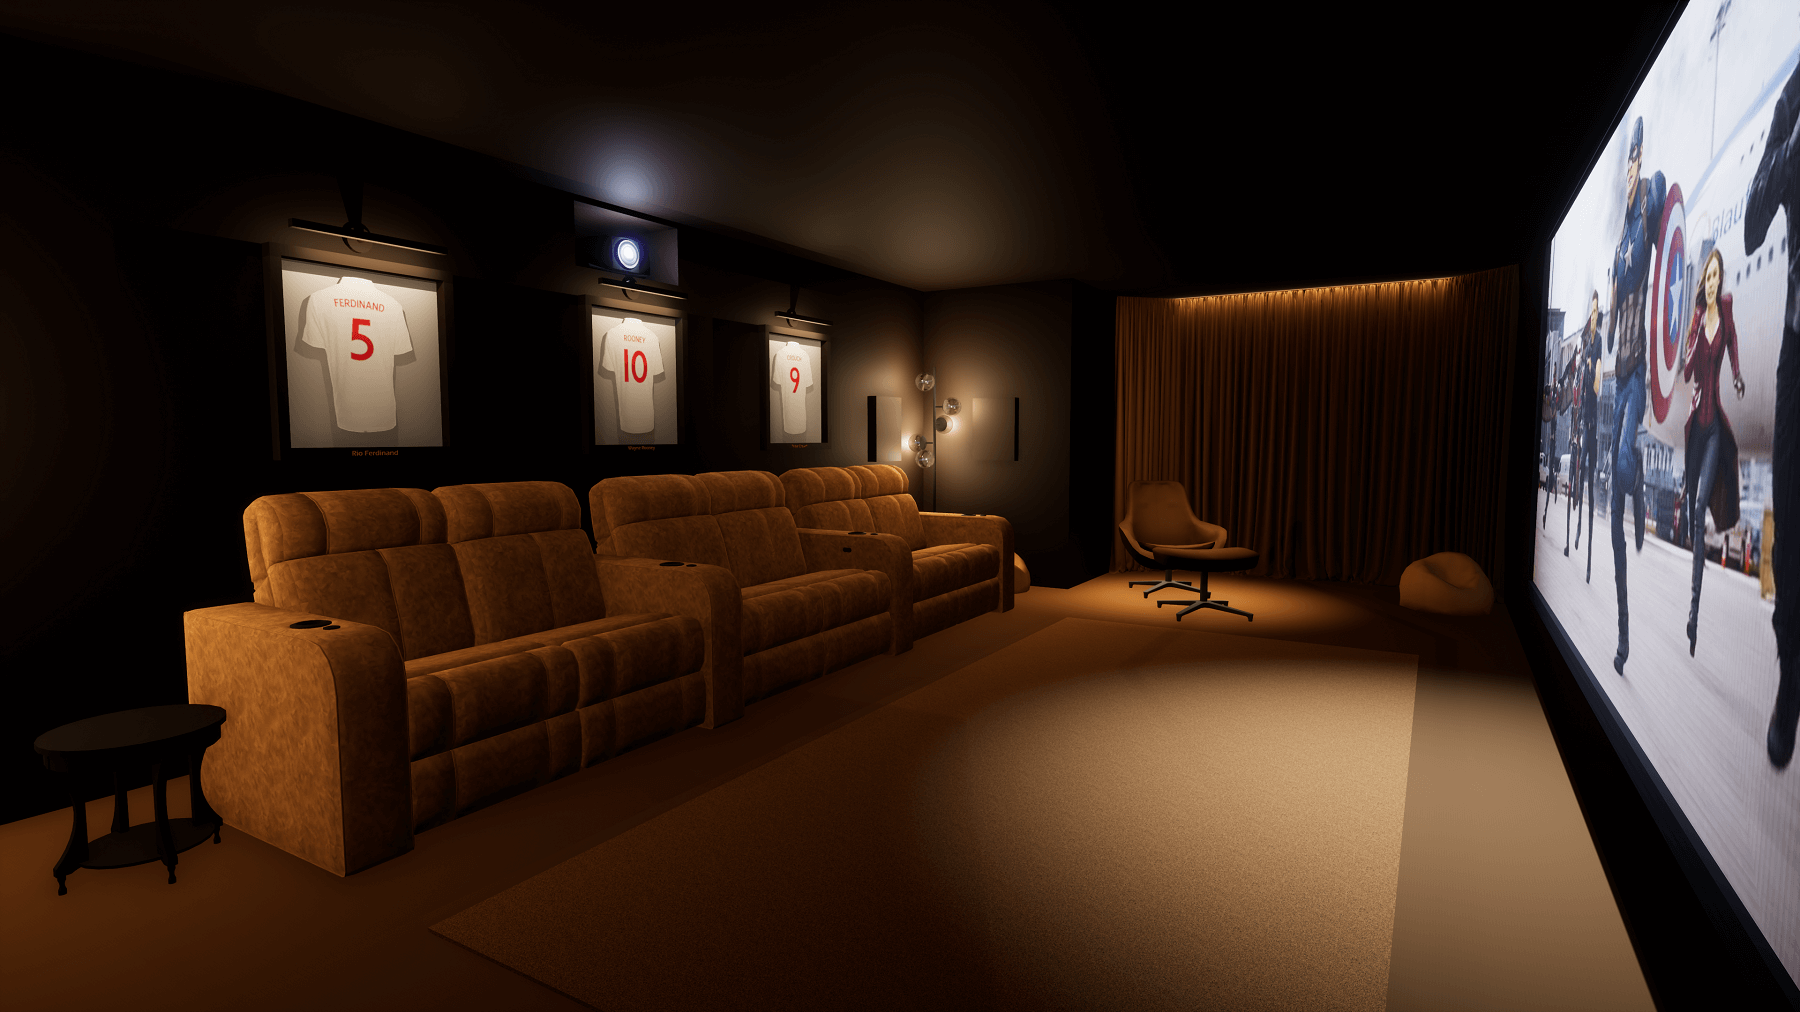 Our Top 40 Home Cinema Room Ideas & Designs | CustomControls